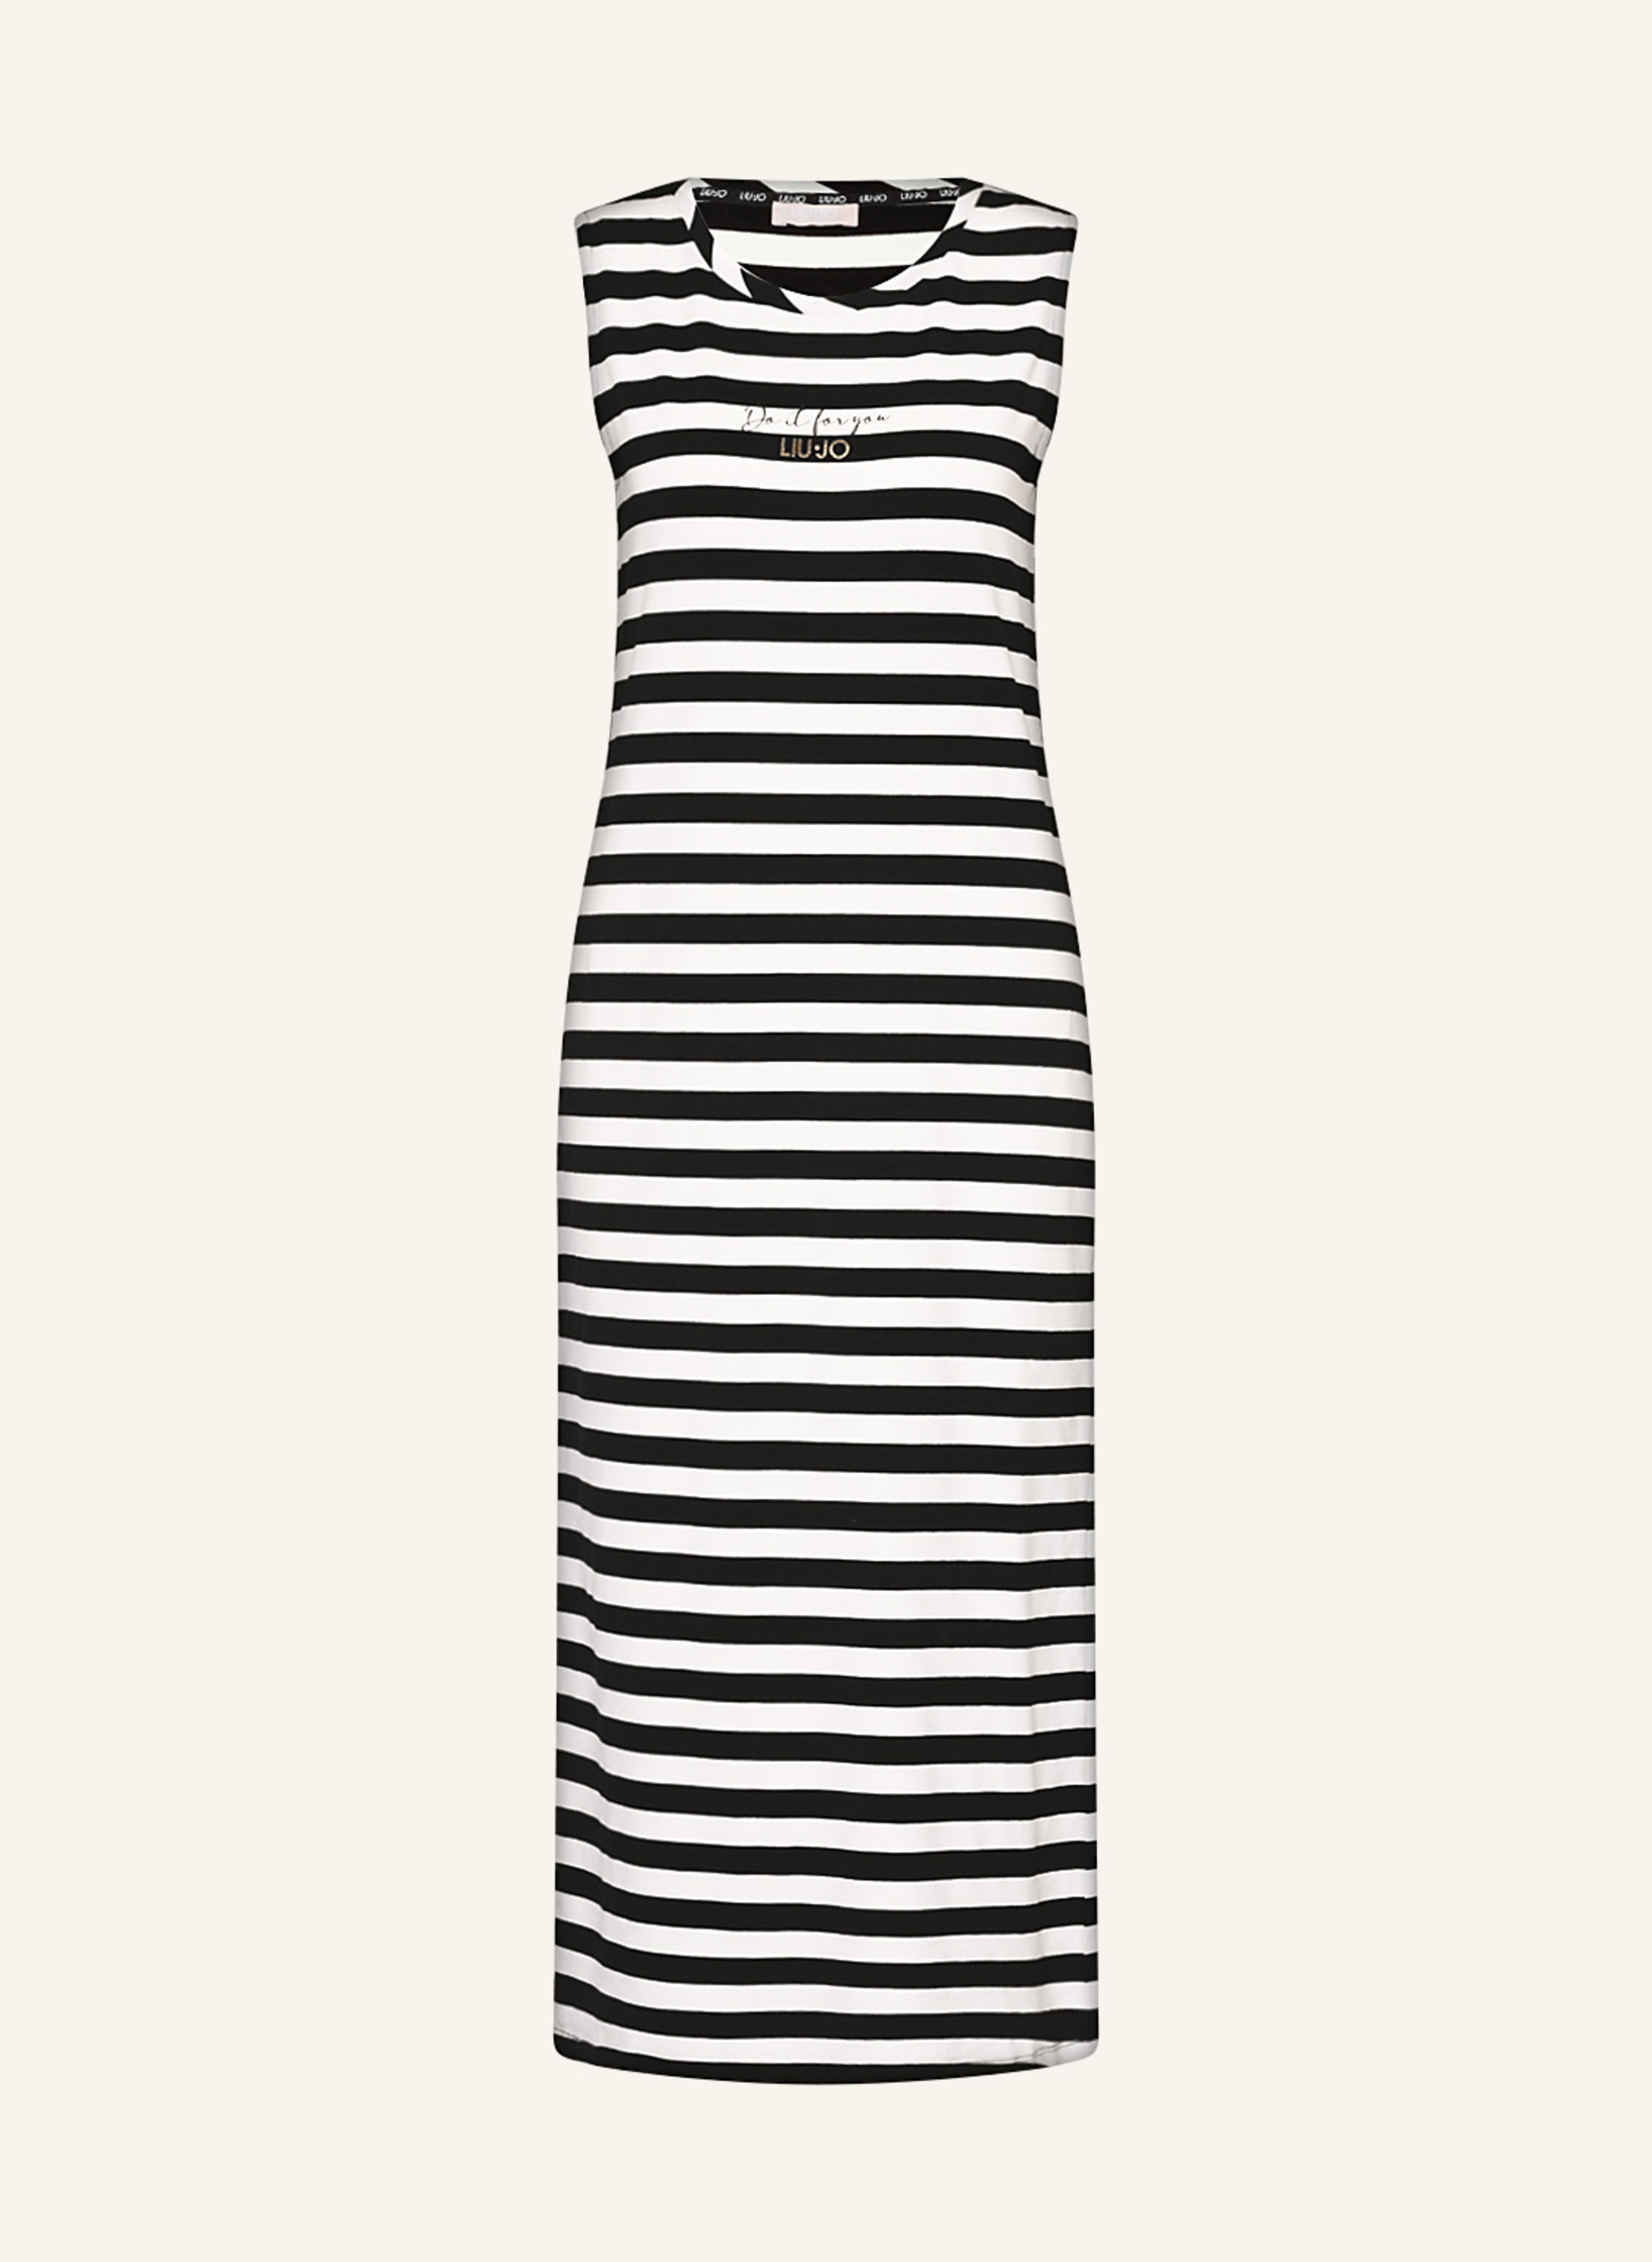 LIU JO Dress in black/ white | Breuninger